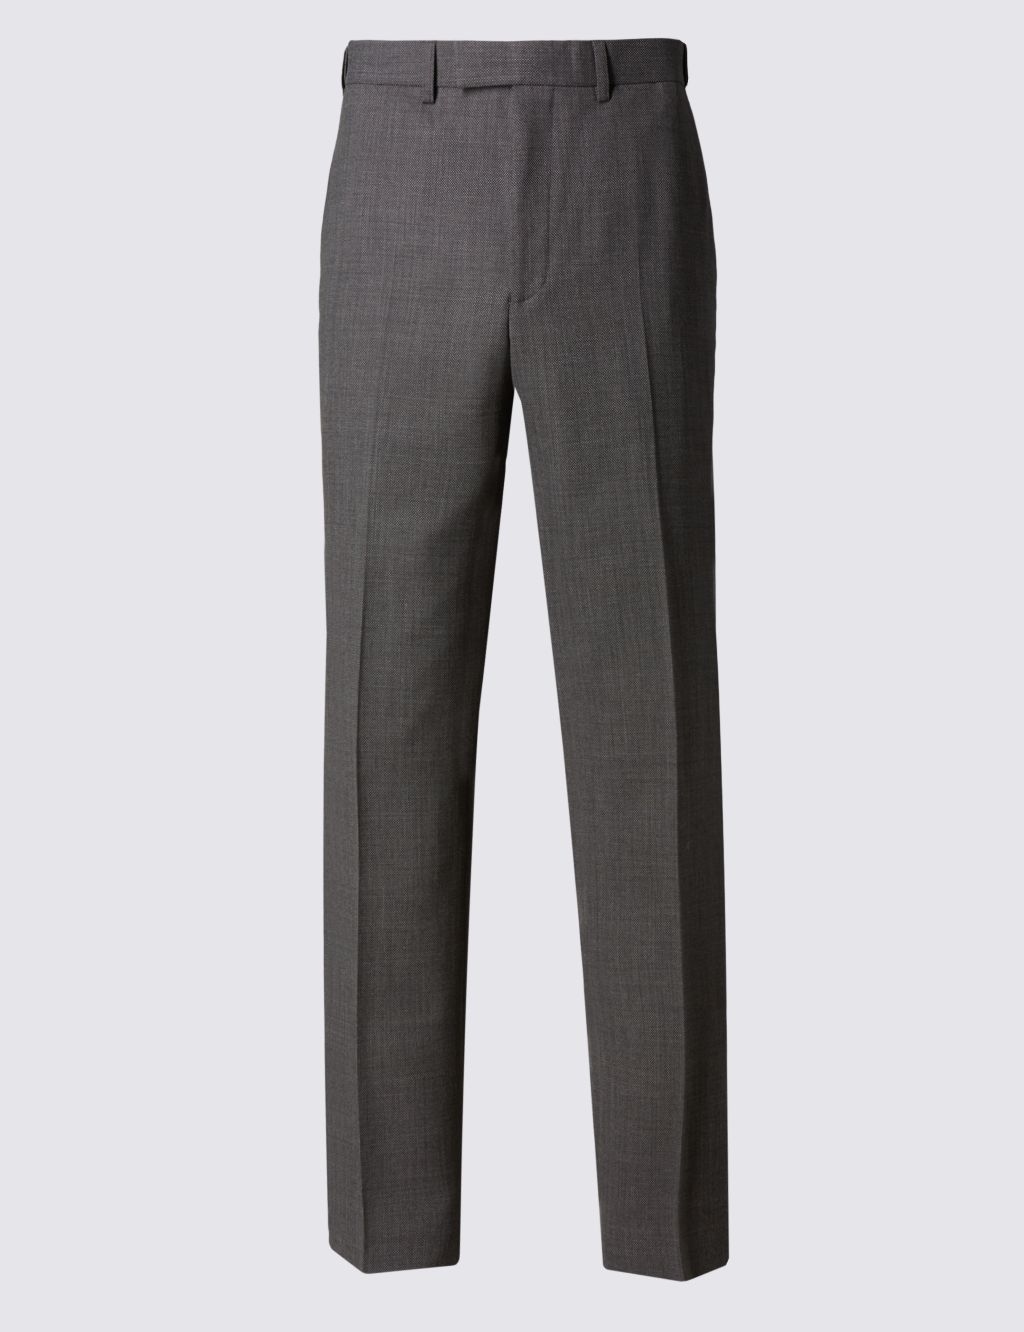 Grey Regular Fit Suit Trousers image 1